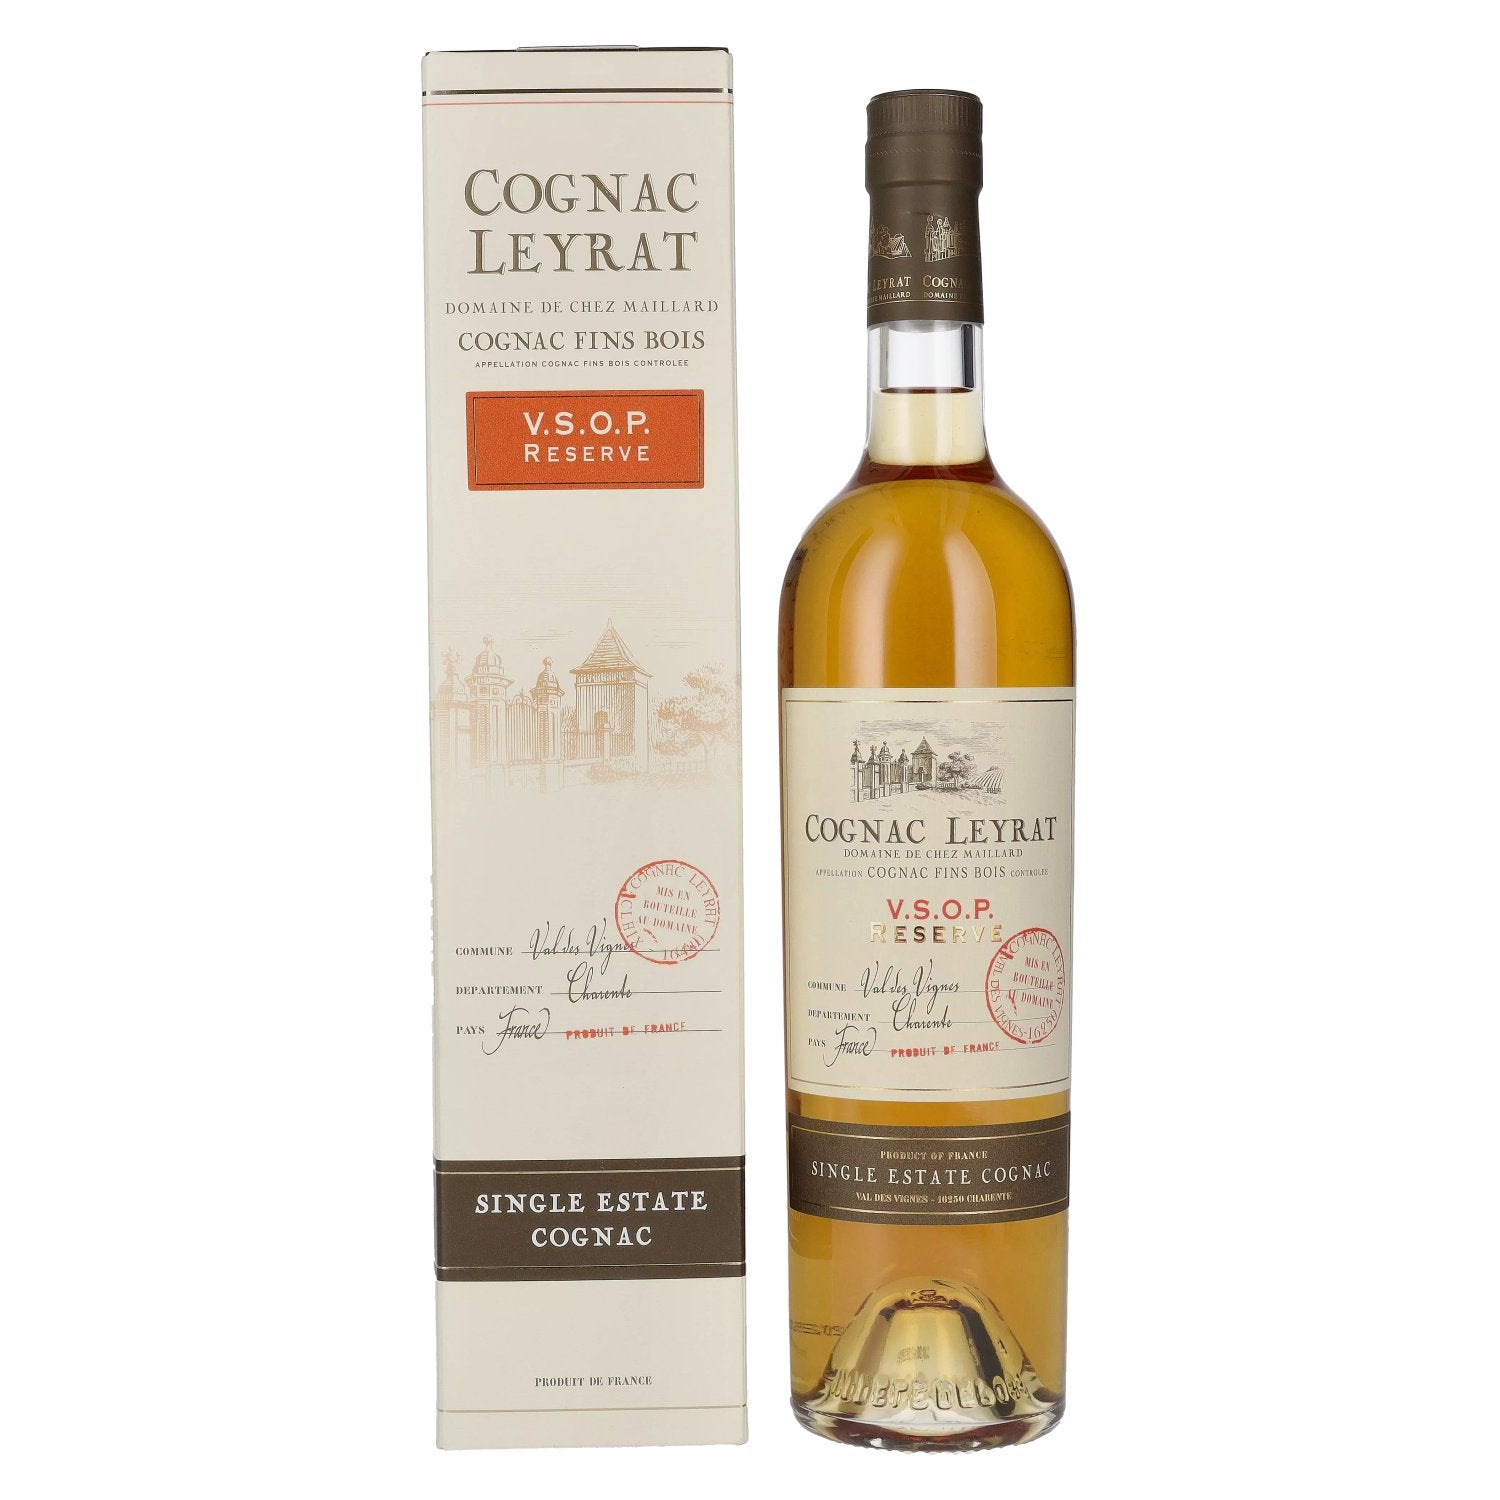 Cognac Leyrat V.S.O.P. Reserve Single Estate Cognac 40% Vol. 0,7l in Giftbox